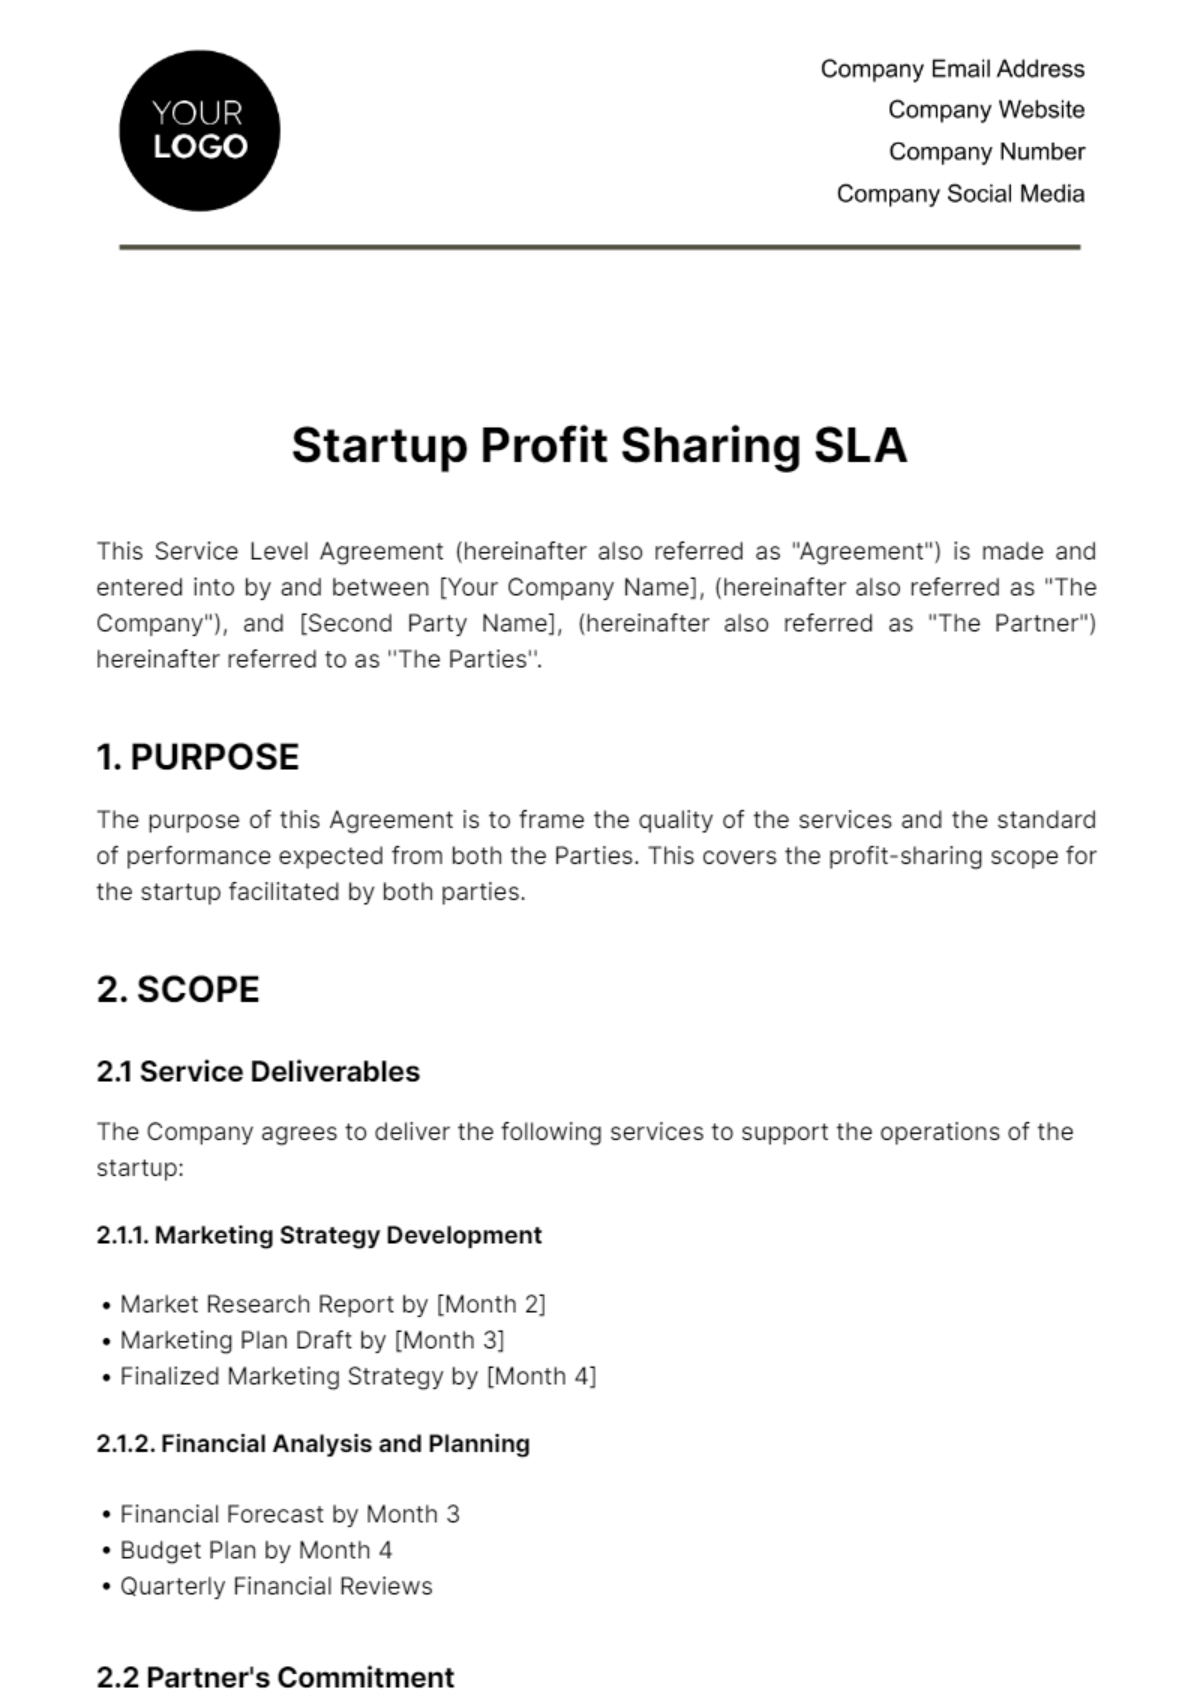 Startup Profit Sharing SLA Template